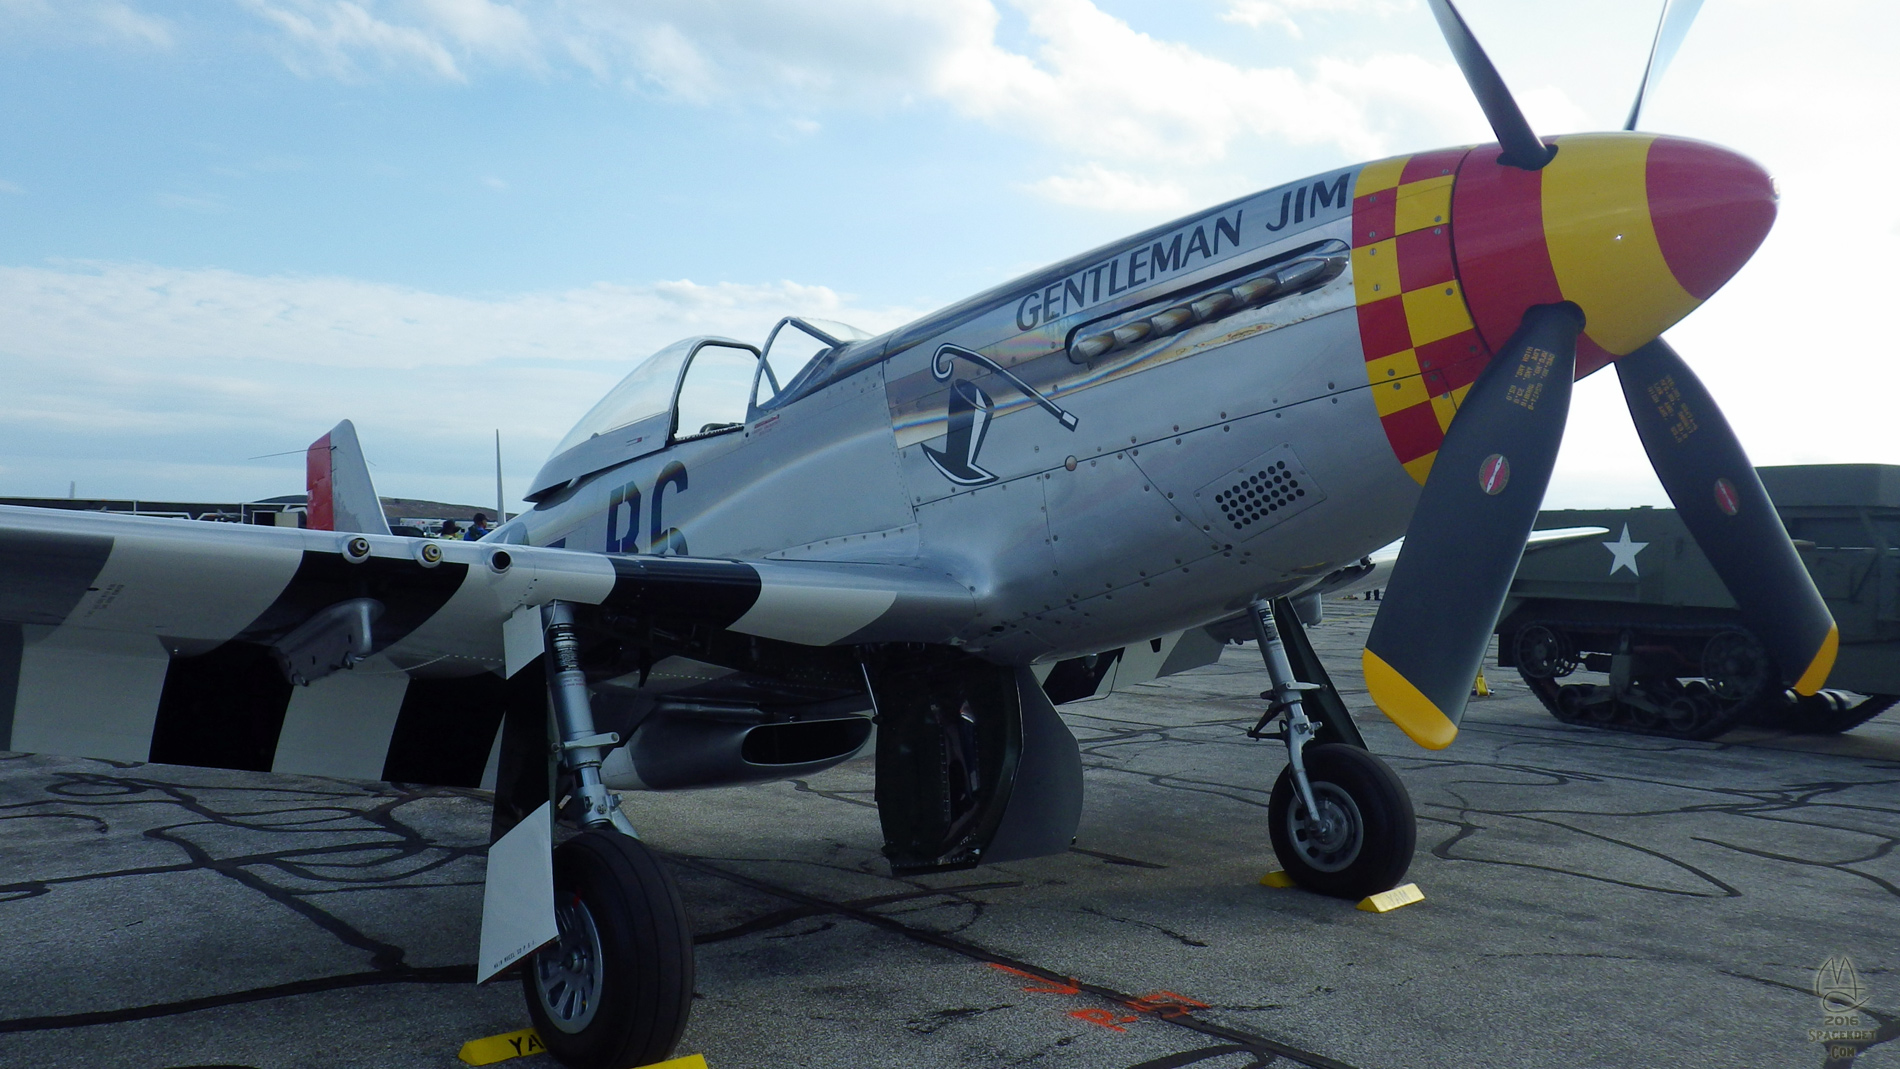 P-51 Mustang 'Gentleman Jim'